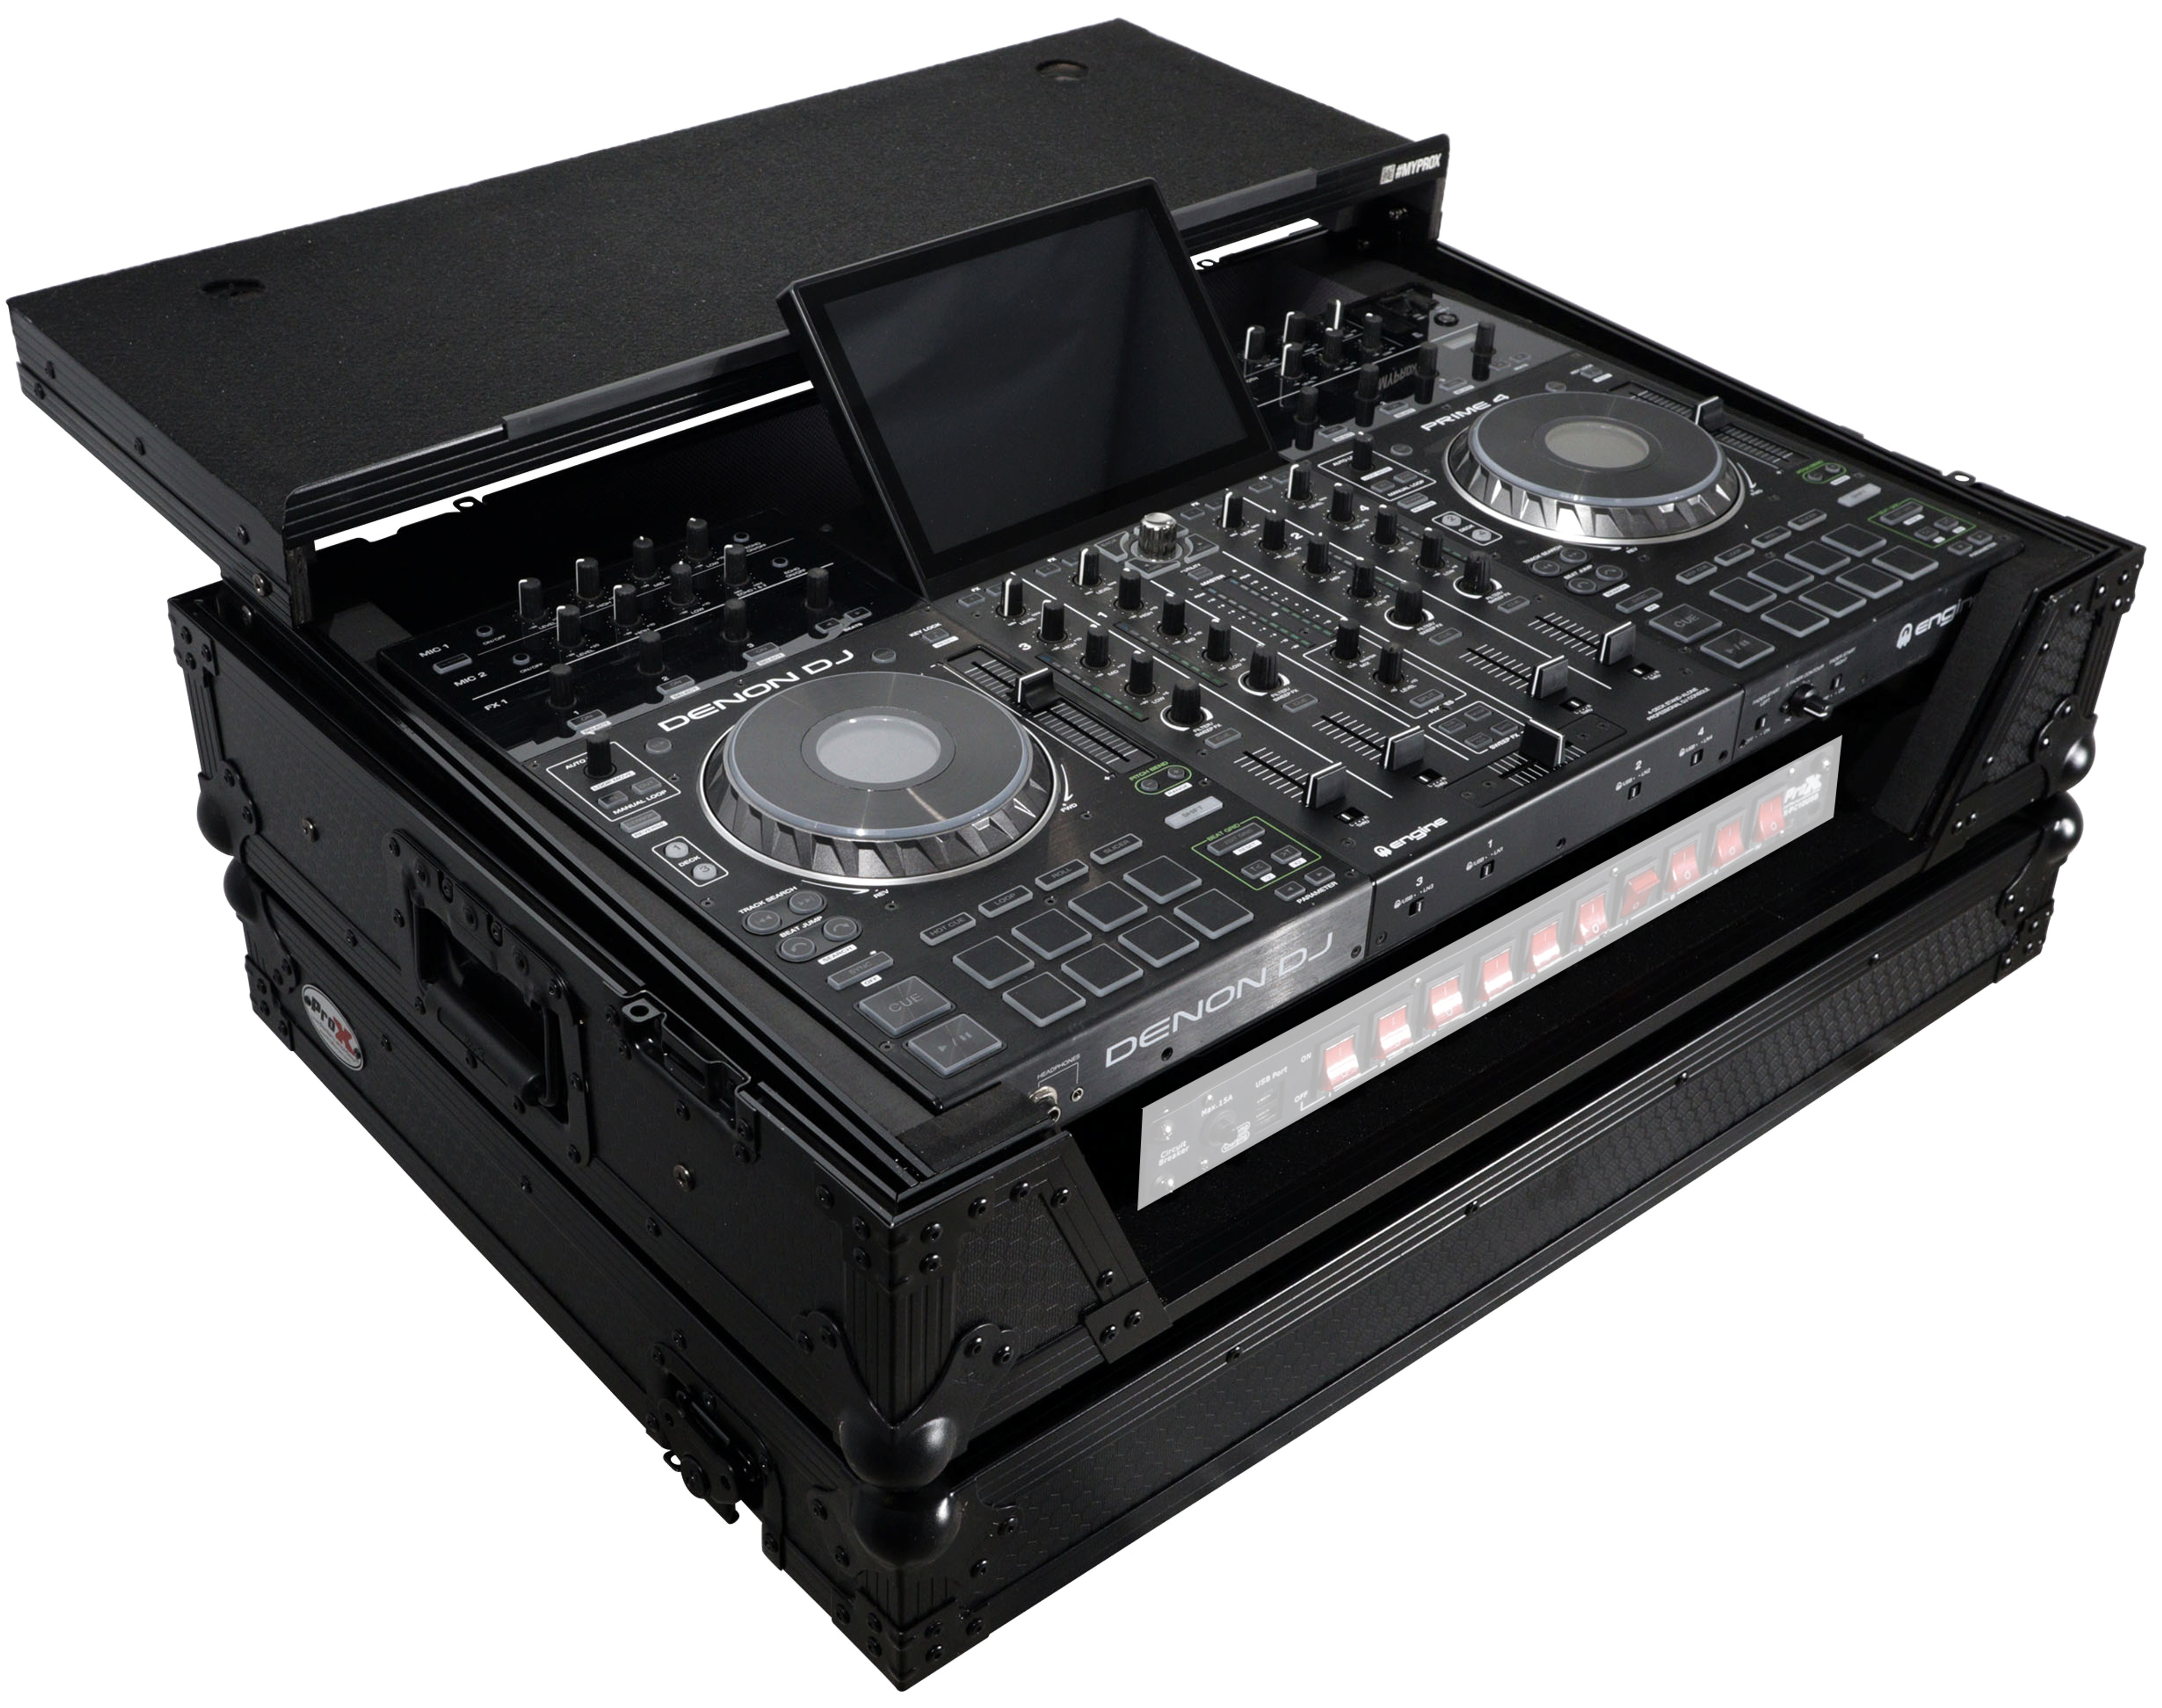 Denon DJ PRIME 4+ 4-Deck Controller with Red Case